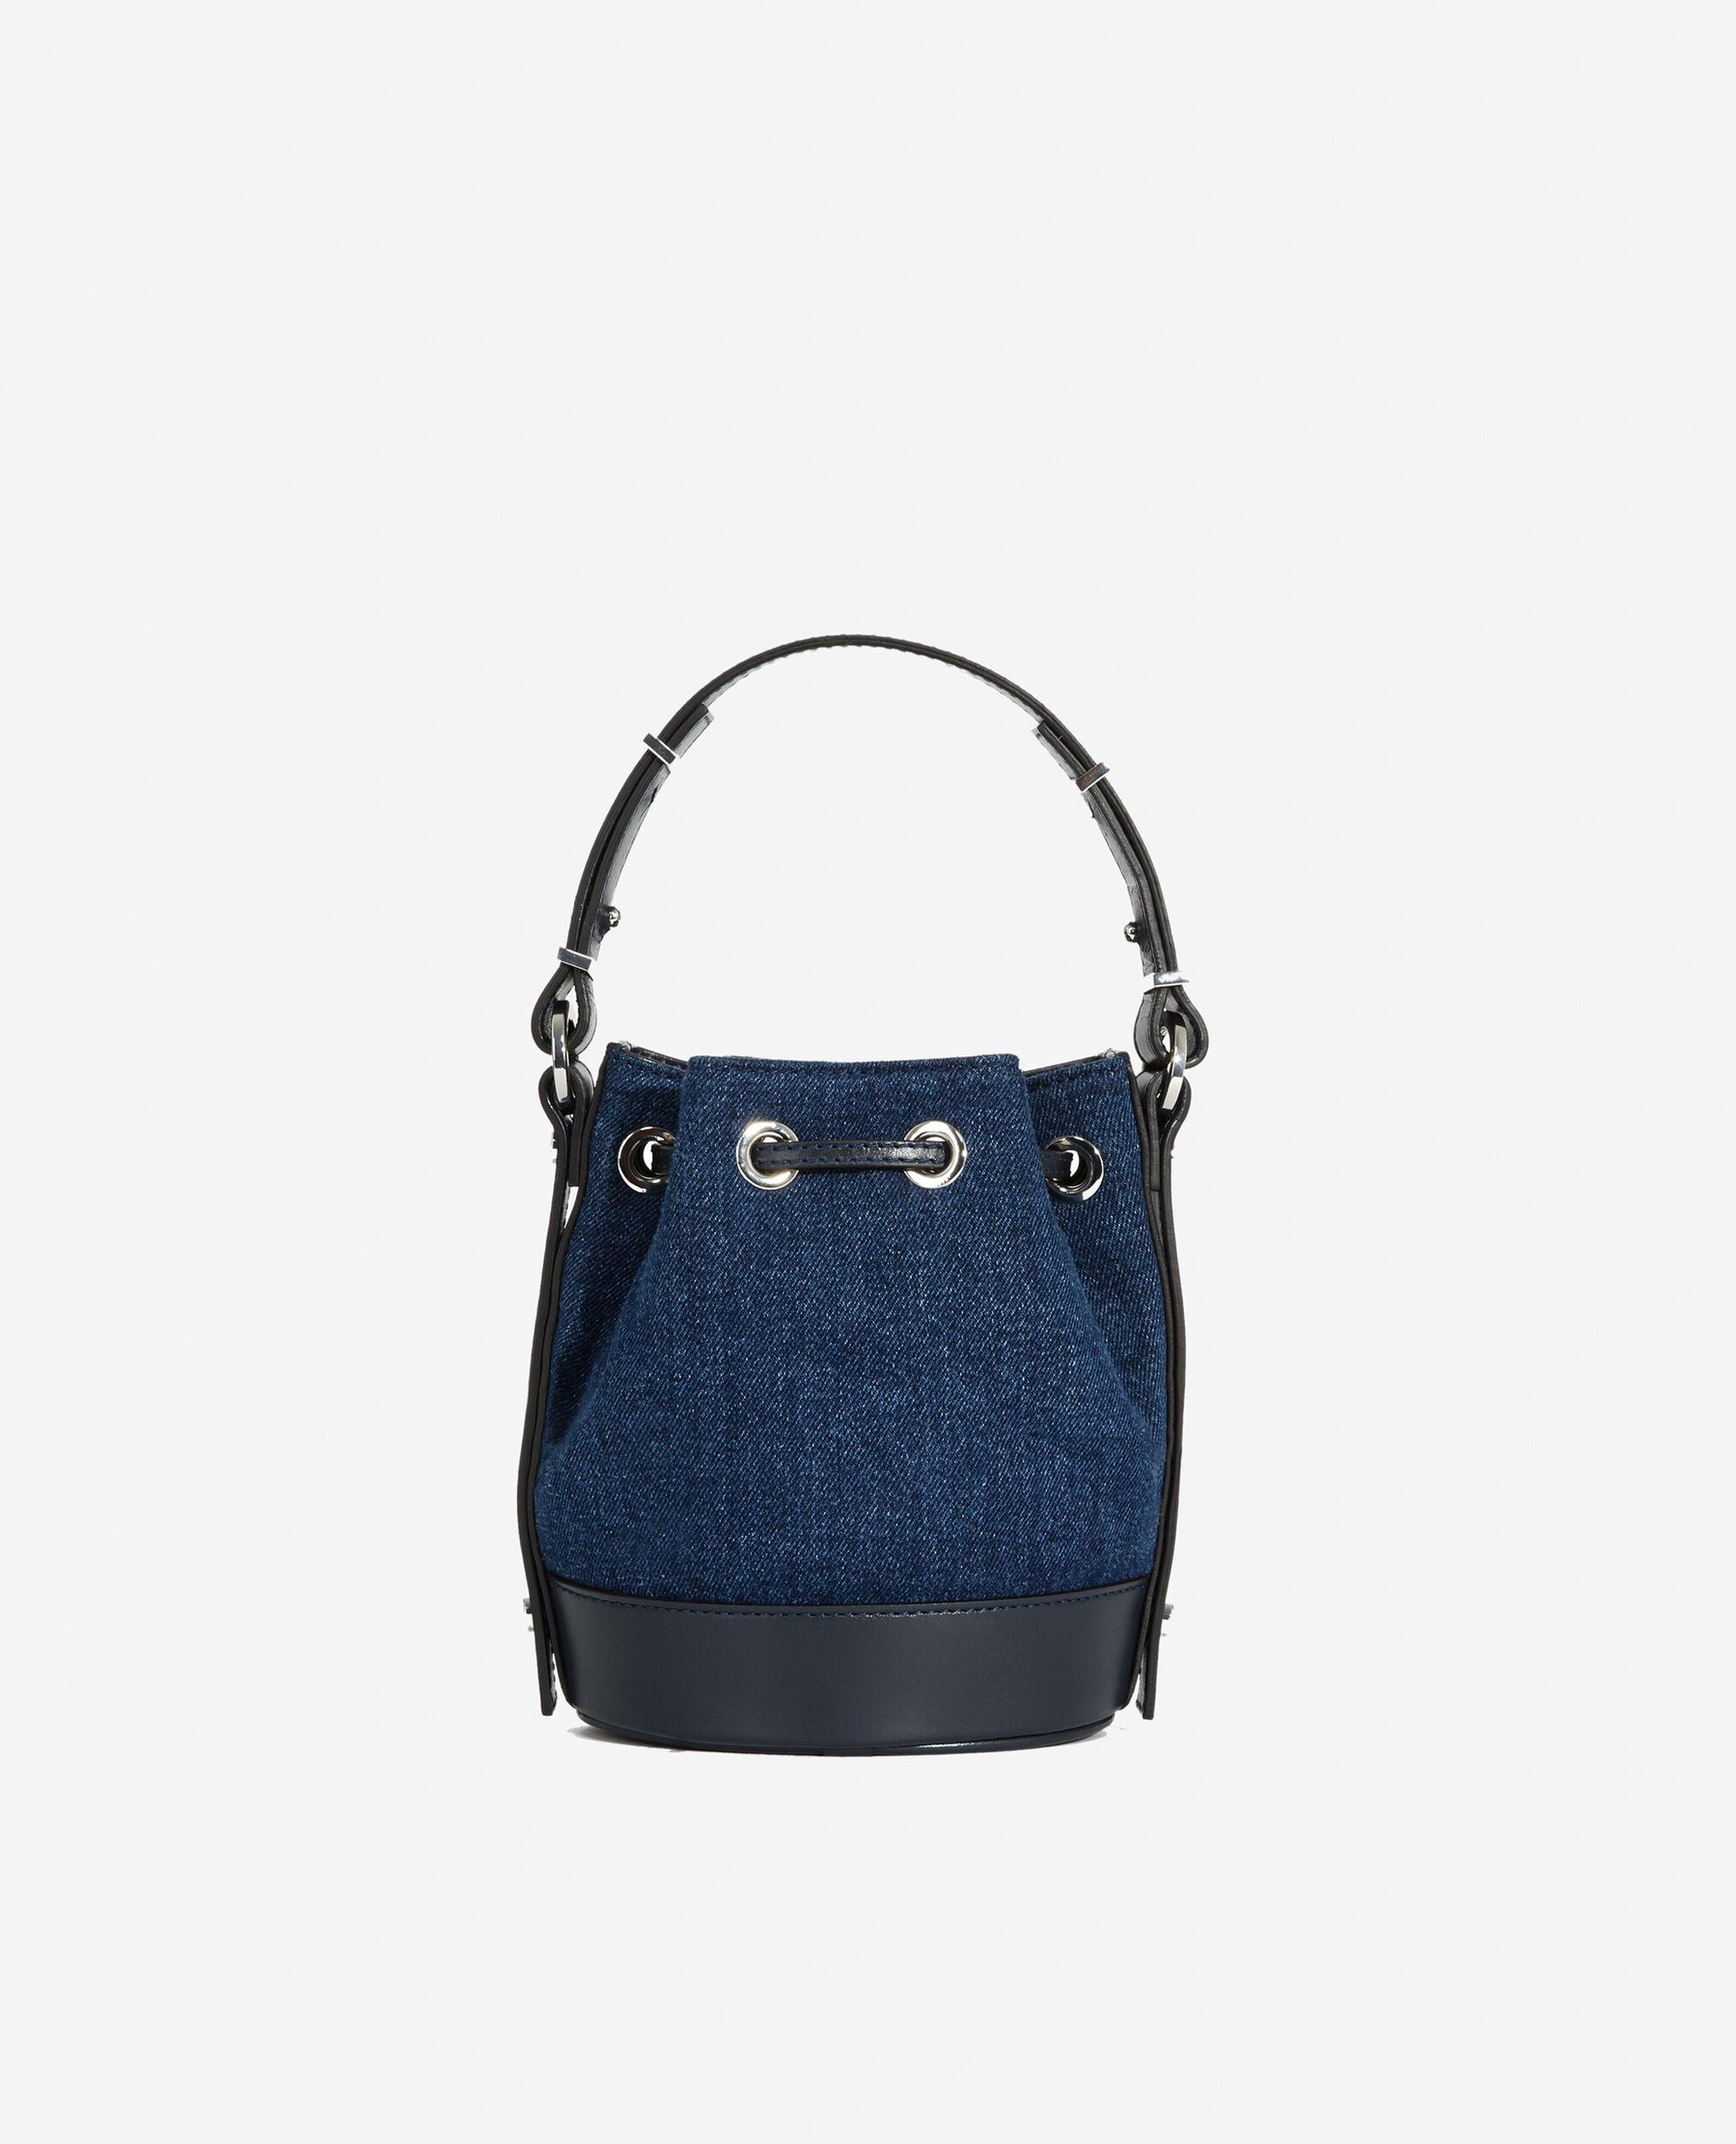 Small Tina bag in dark blue denim, BLUE DENIM, hi-res image number null